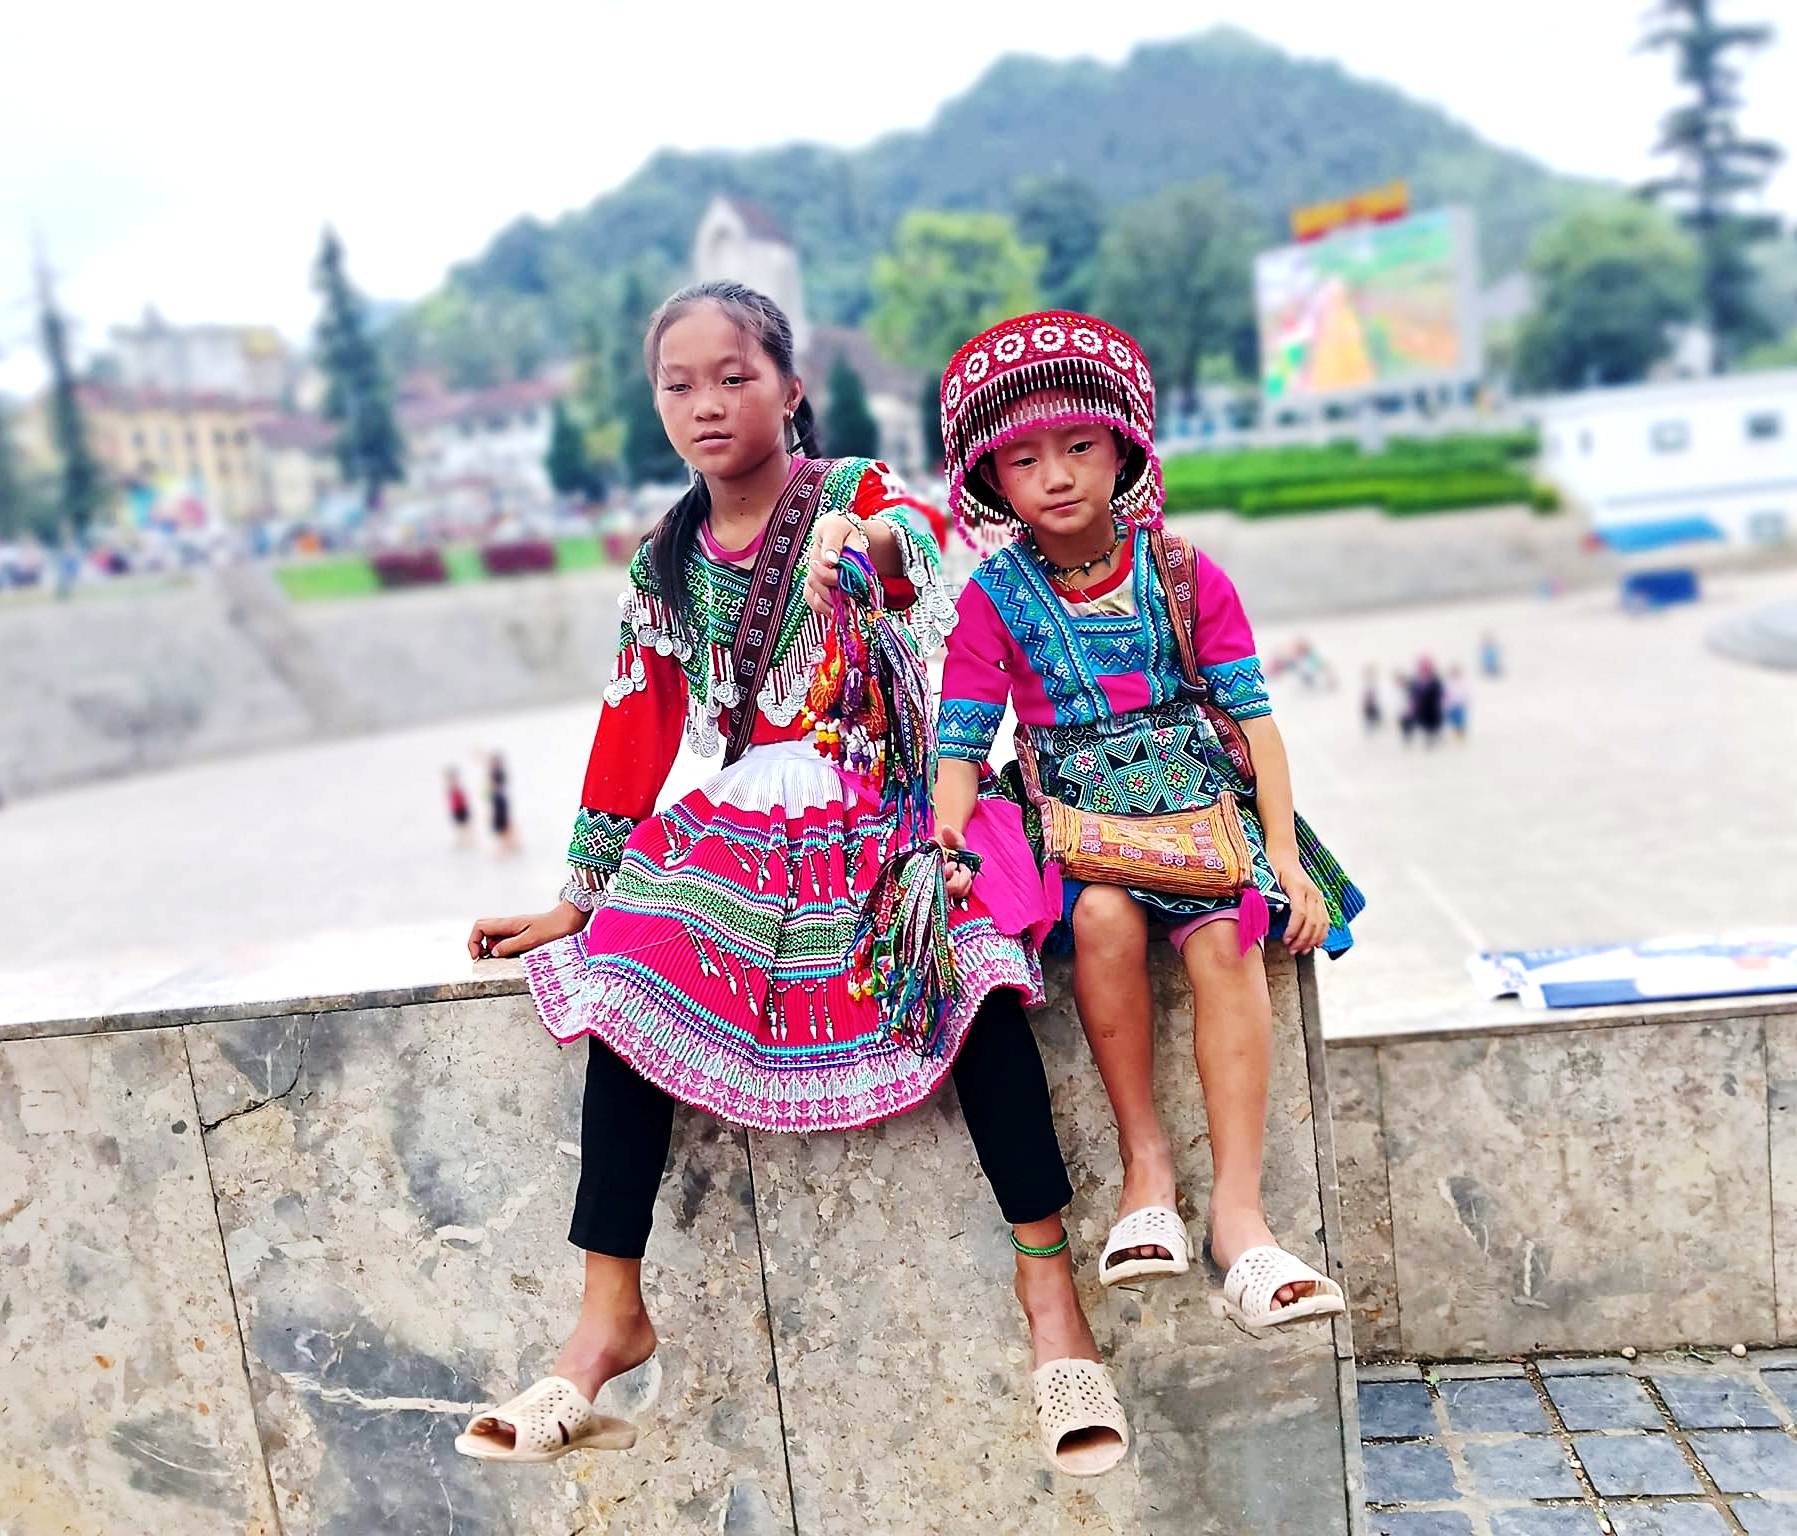 Dues nenes hmong · Sapa, Vietnam FOTO:  Carme Cabús Manyosa